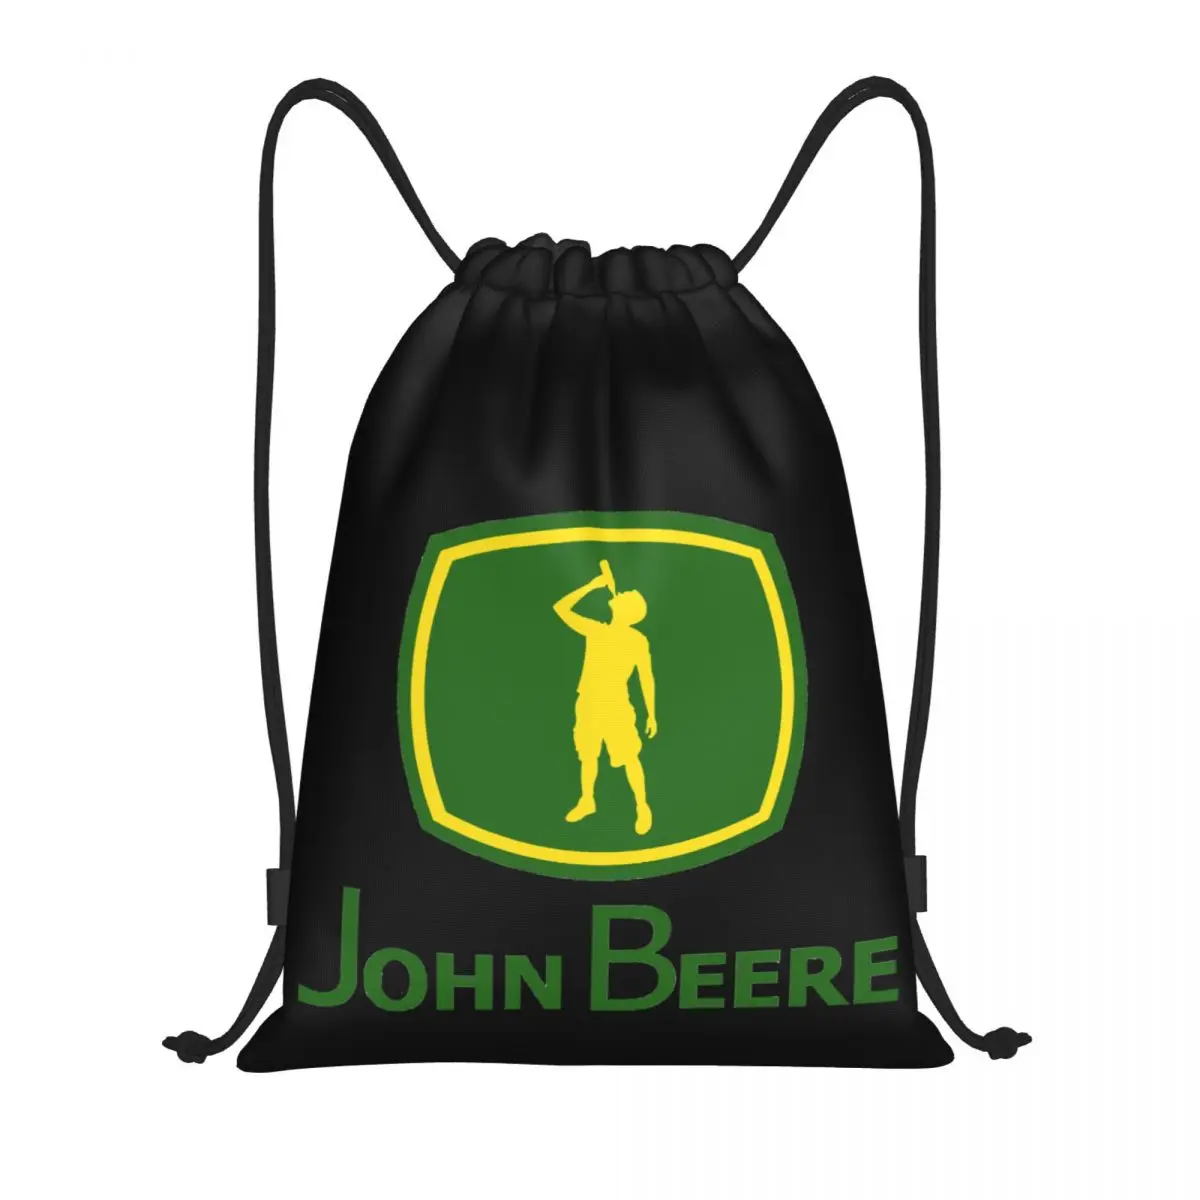 John Beere Funny Beer Lover Camping Gift Funny Drawstring Bags Gym Bag Infantry pack Patogi kuprinė Juokinga naujovė Nuotrauka 0